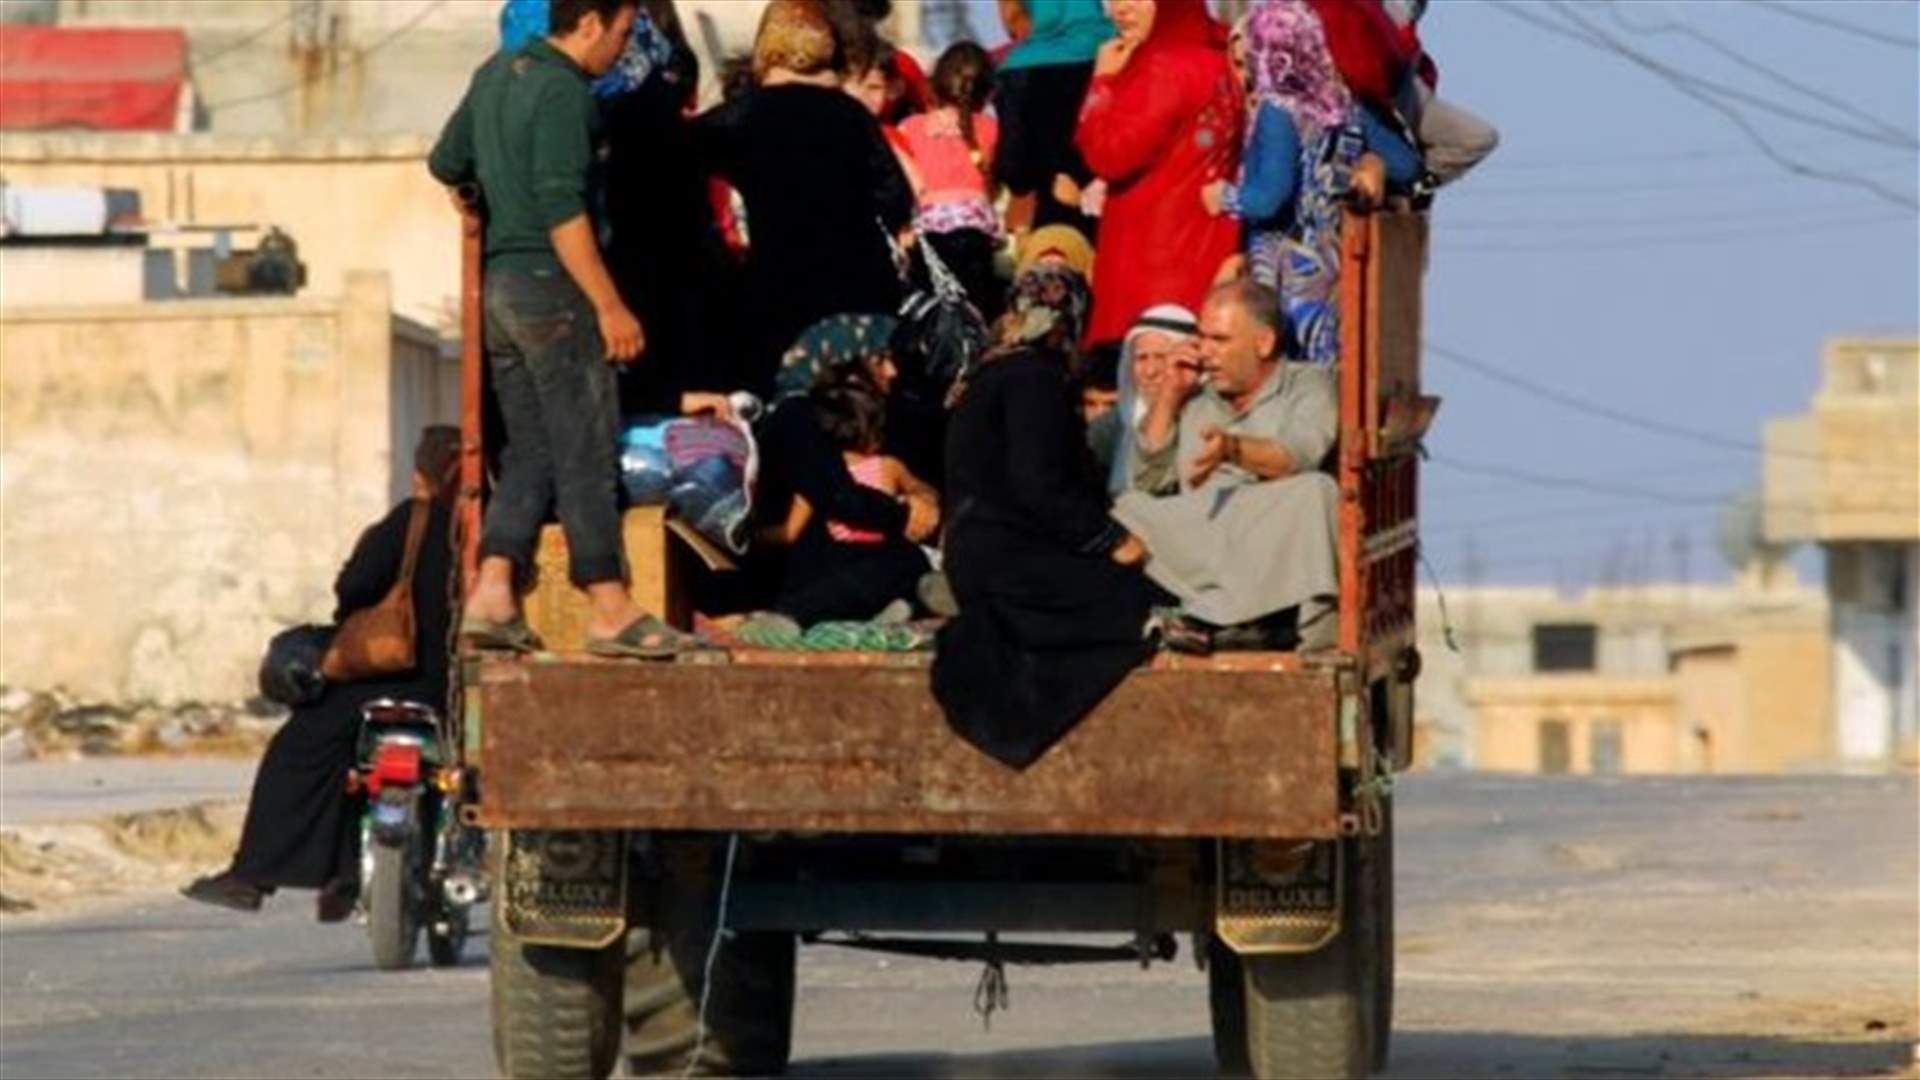 Around 40,000 Syrians displaced by fighting near Hama - UN